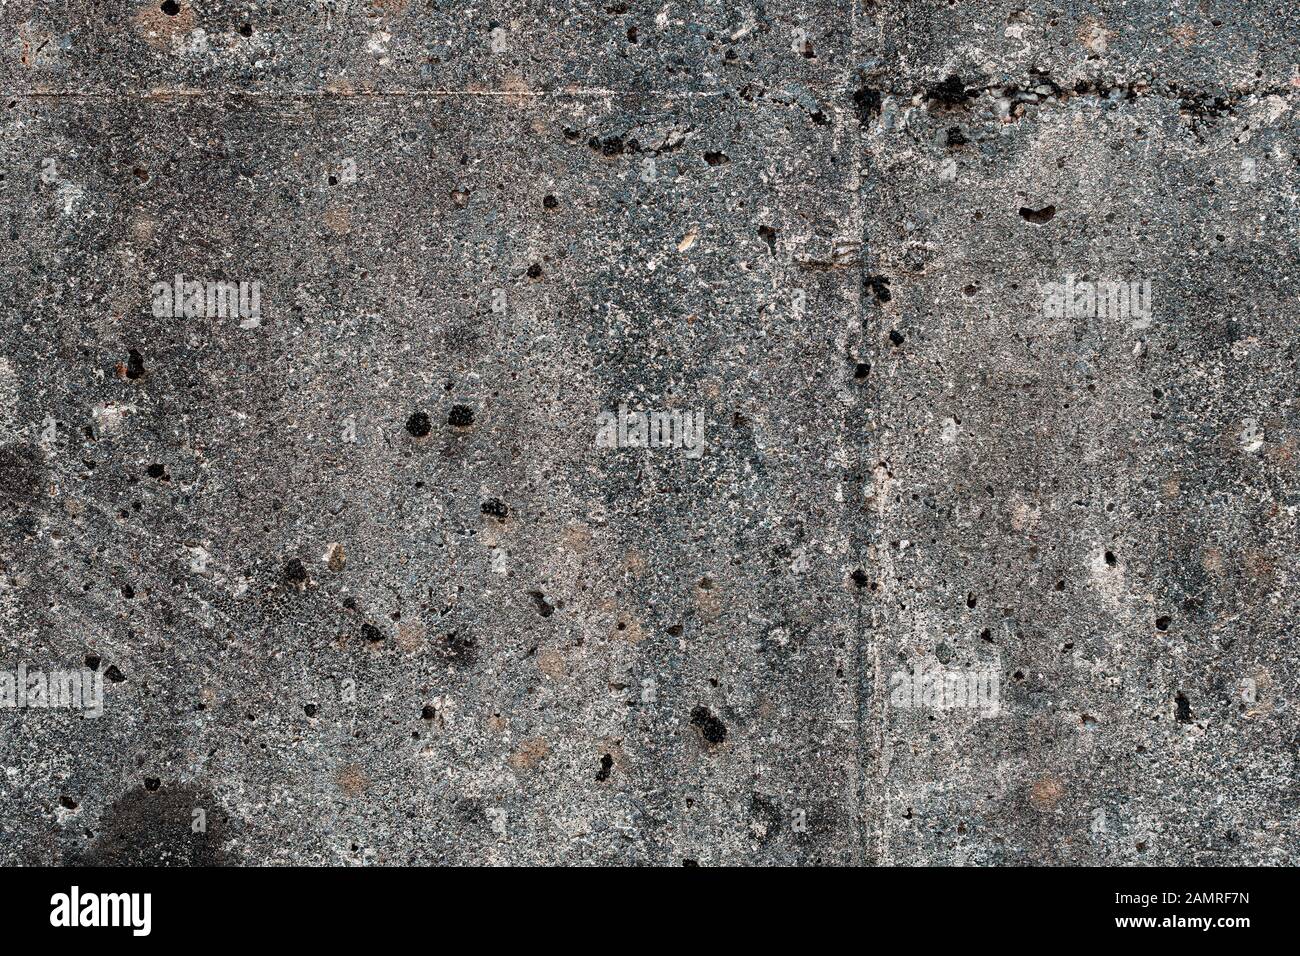 Grunge concrete surface background texture, old worn facade pattern Stock Photo